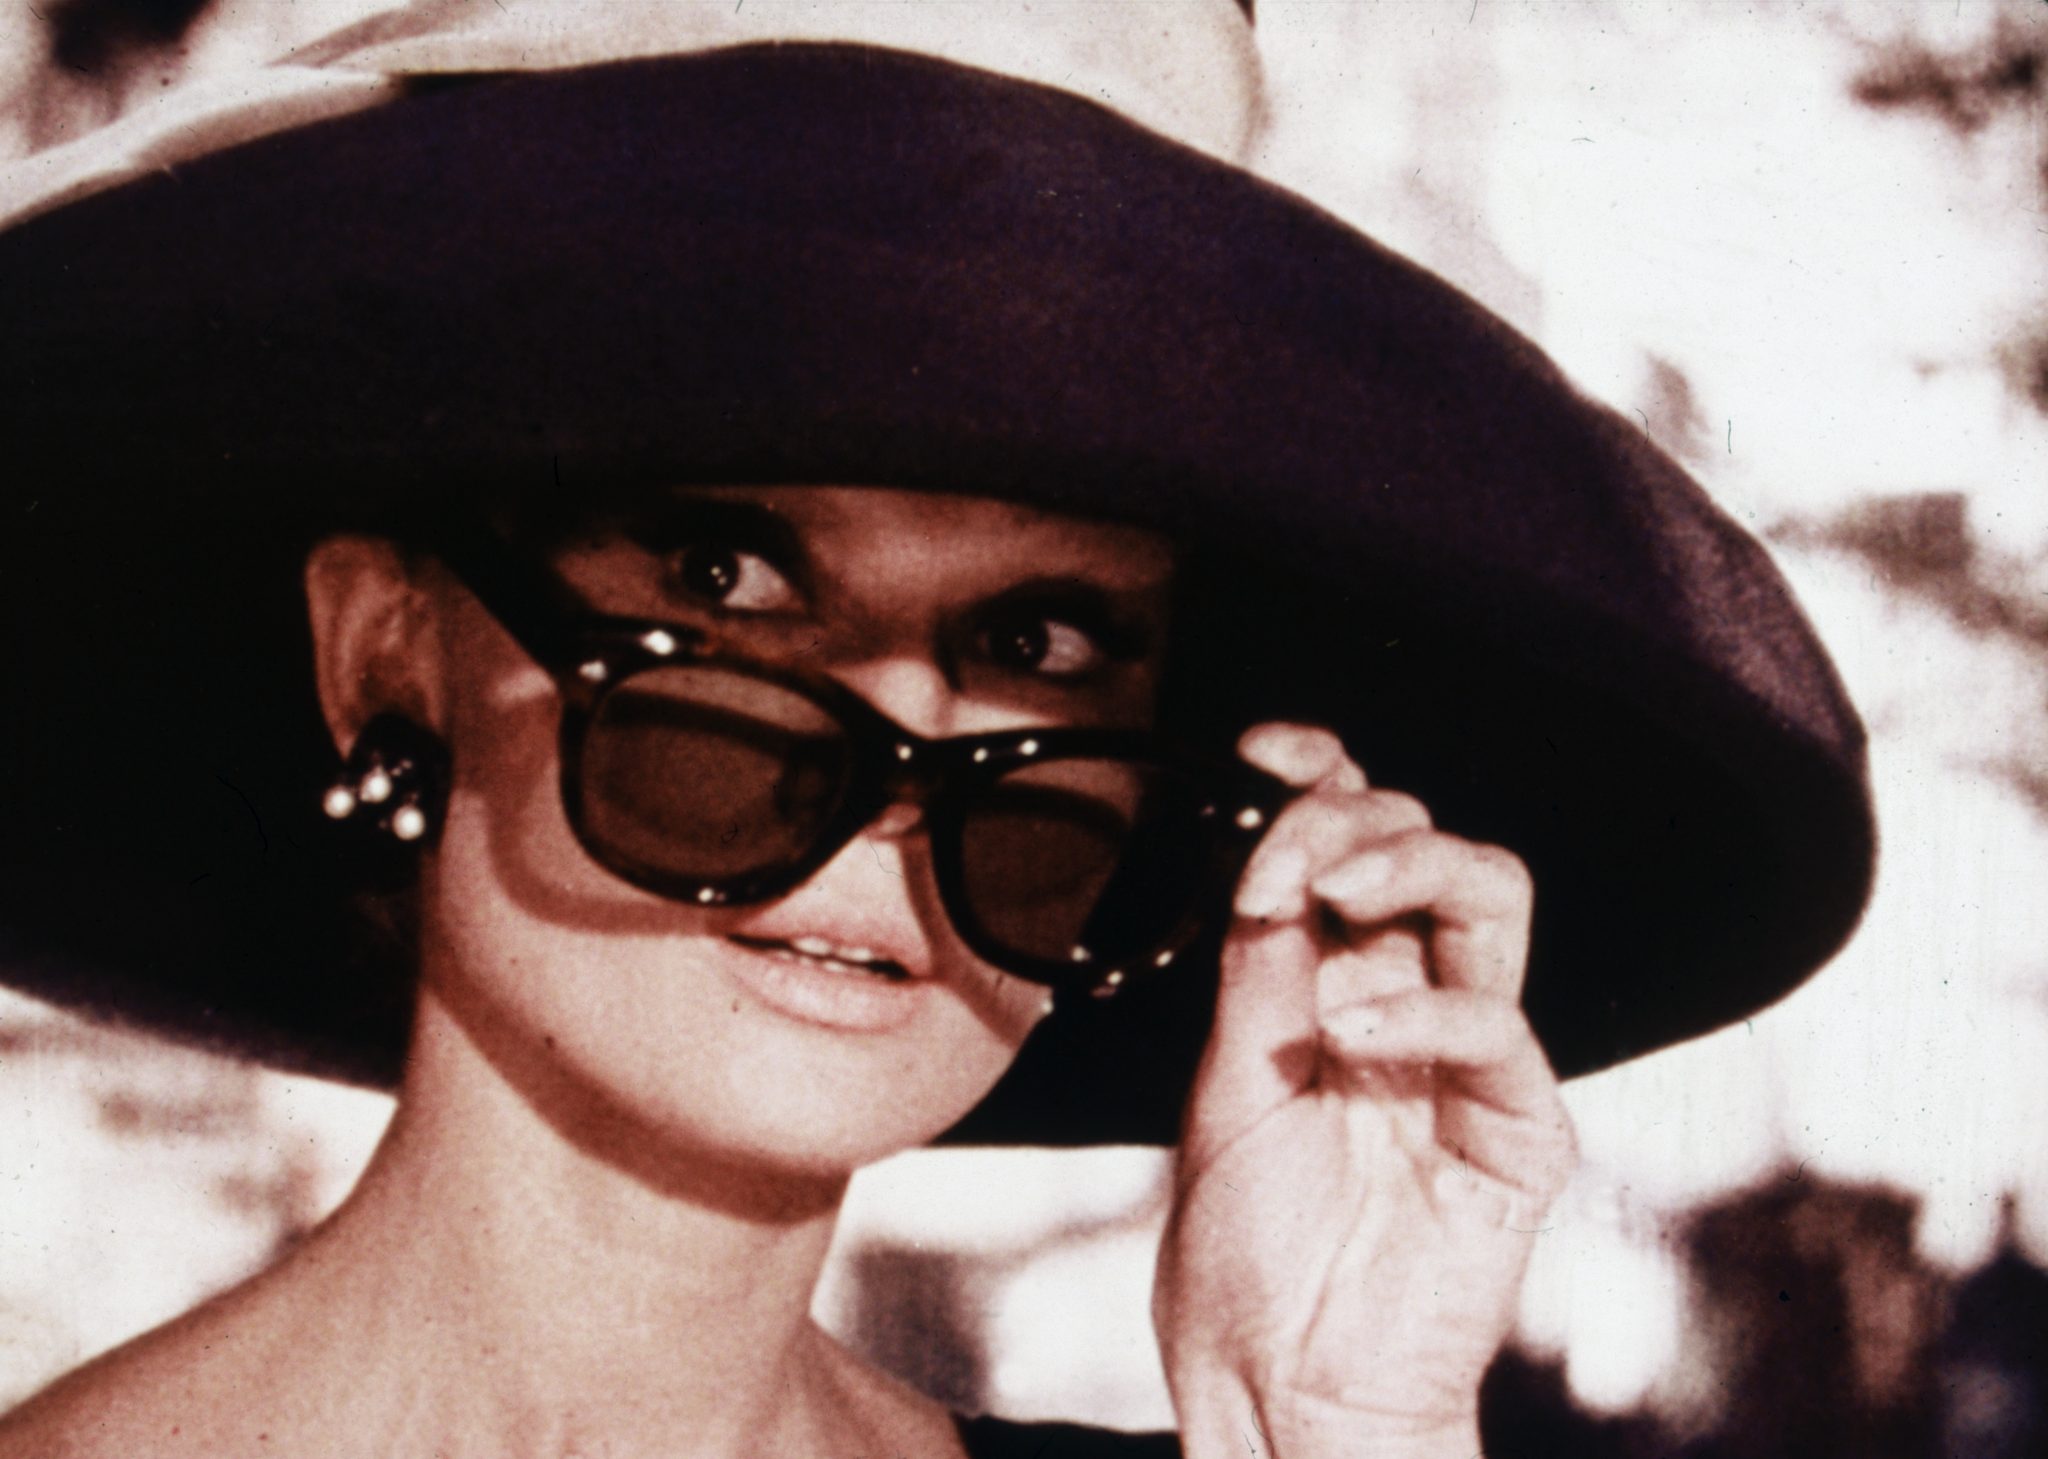 Exquisite Vintage Brand Designer Cat Eye Sunglasses Women Sun